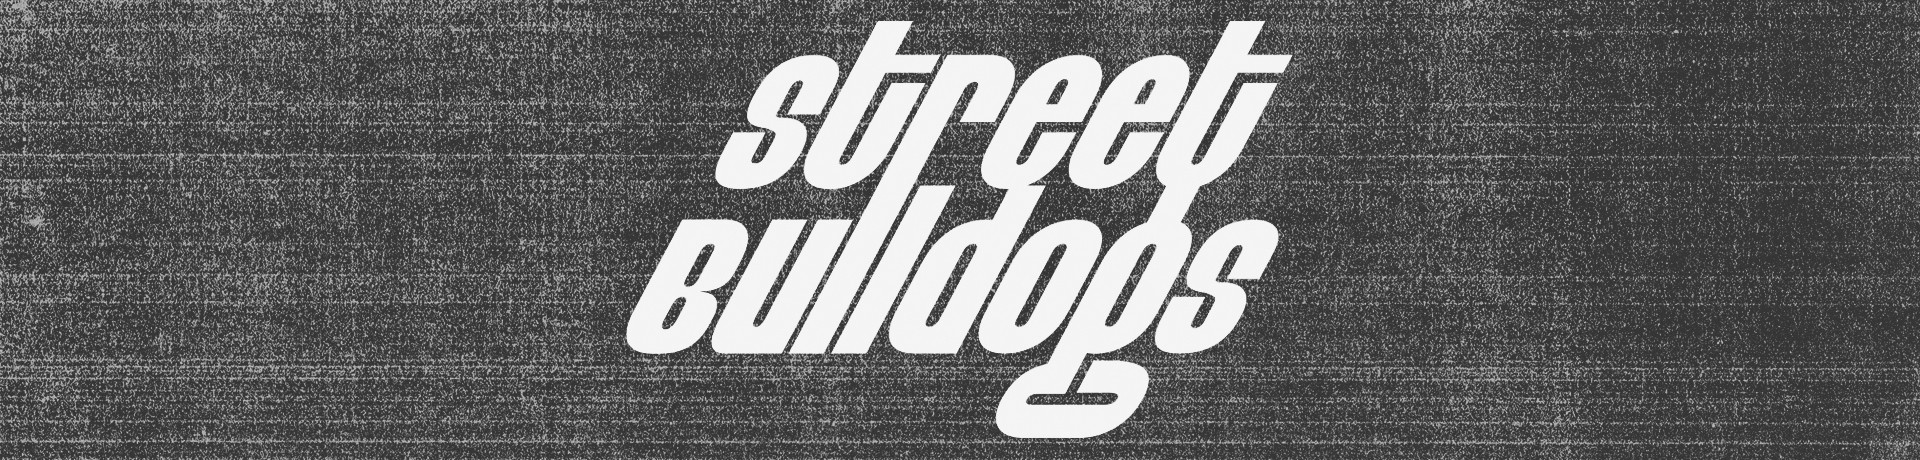 Street Bulldogs - Bulldog 